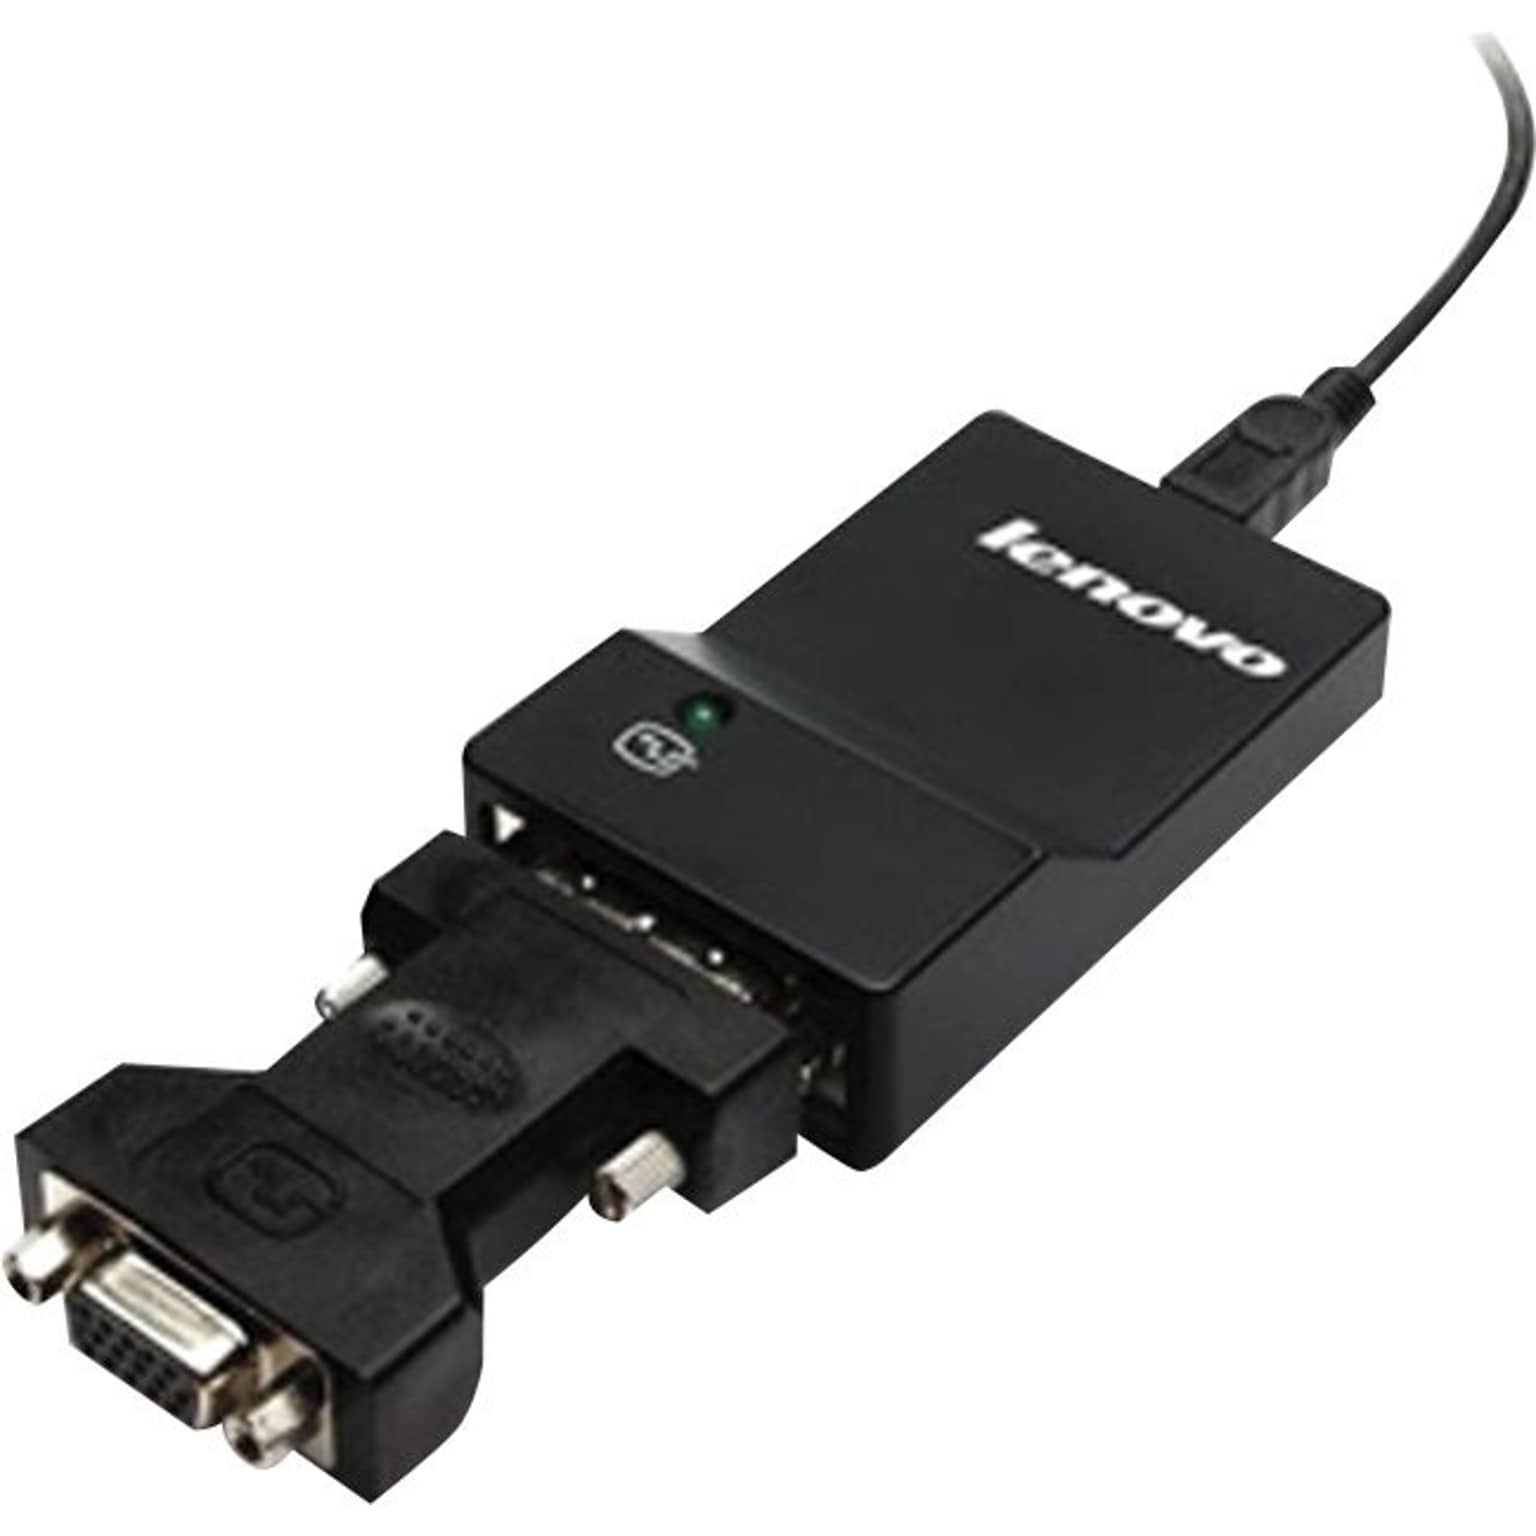 Lenovo™ USB 3.0 To DVI/VGA Monitor Adapter; Black